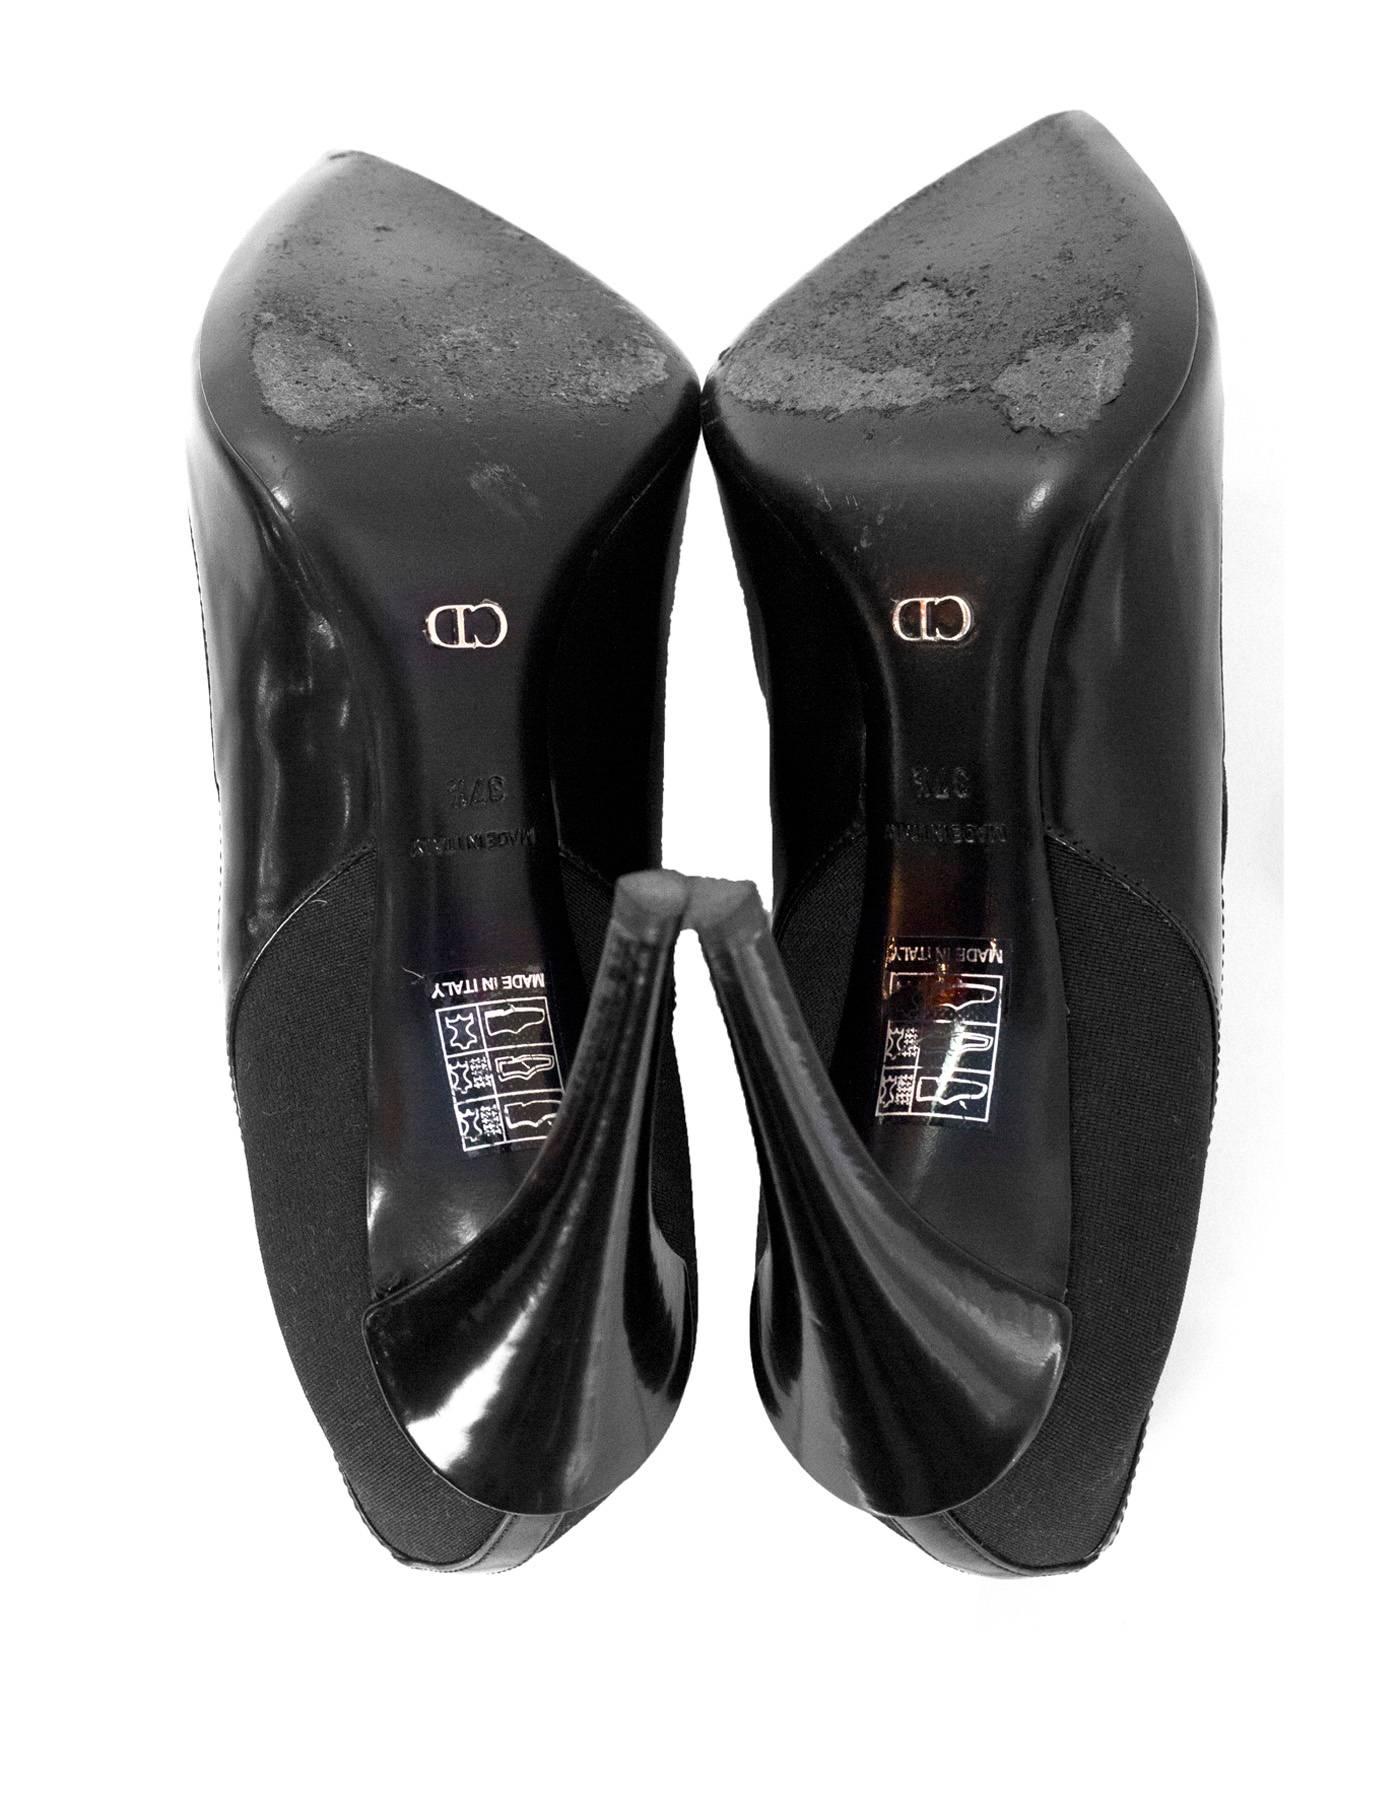 Christian Dior Black Leather & Elastic Pumps sz 37.5 w/ BOX 1